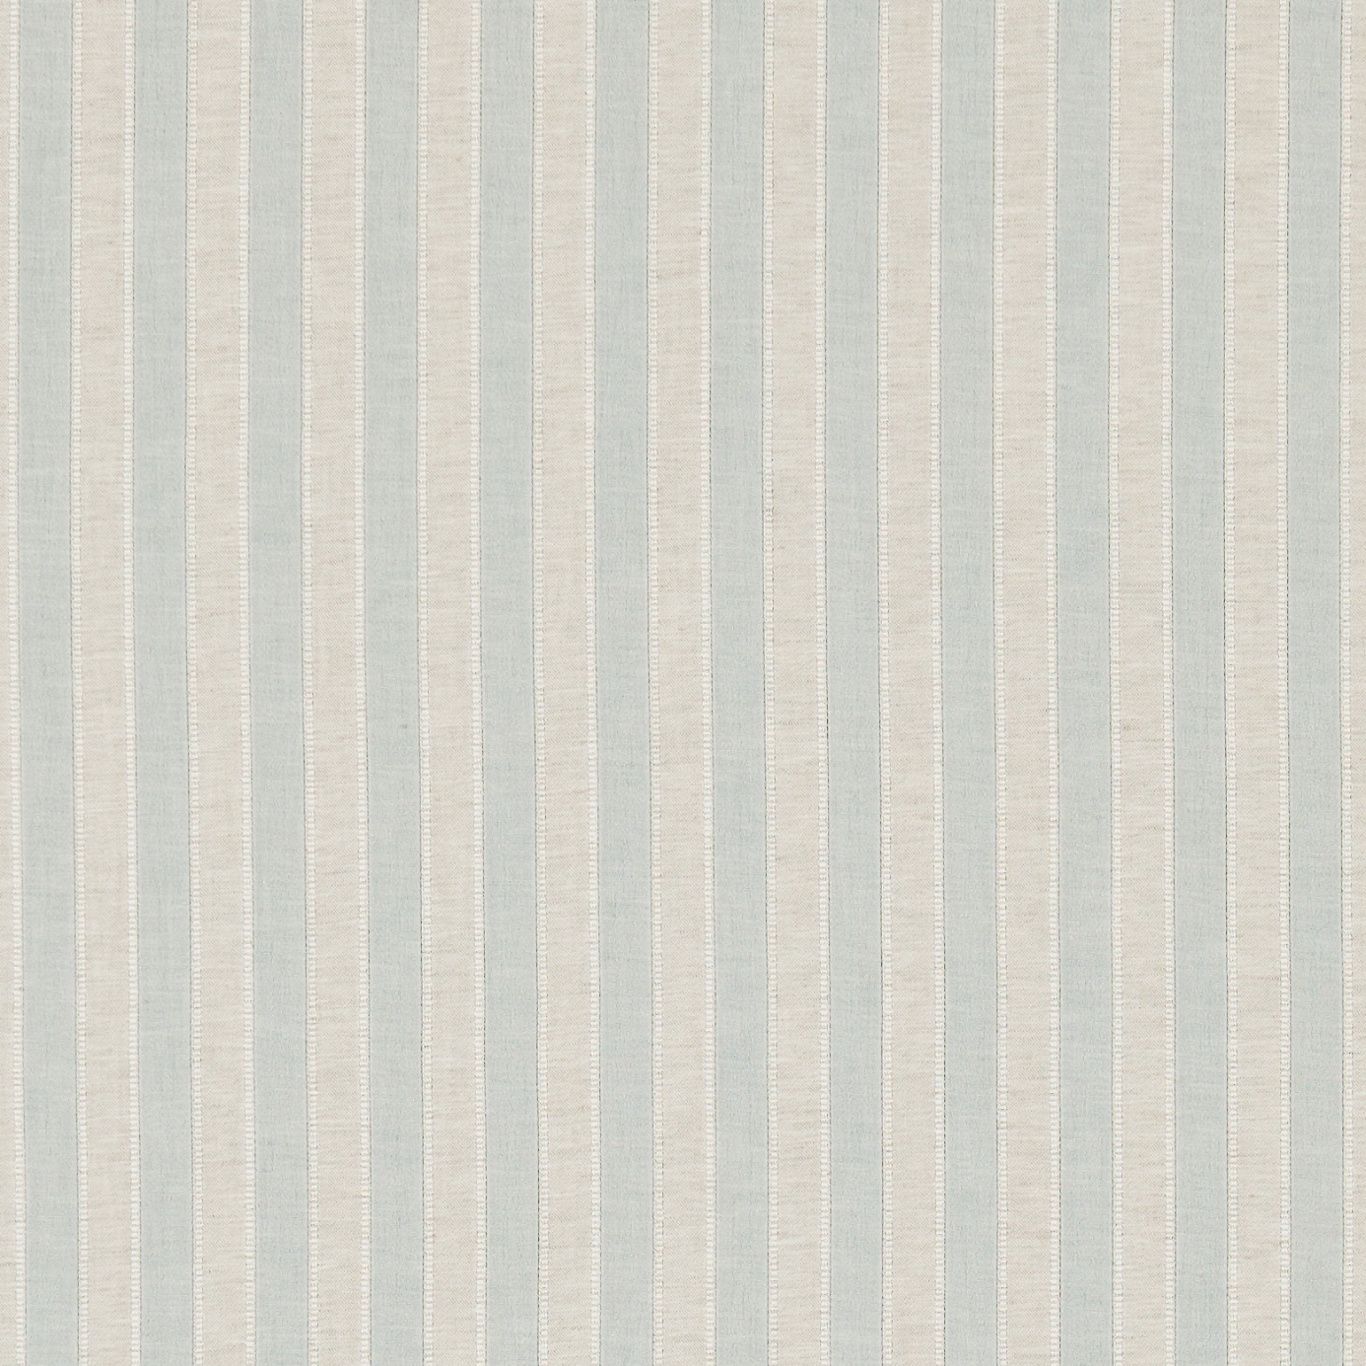 Sorilla Stripe Eggshell Linen Fabric by SAN